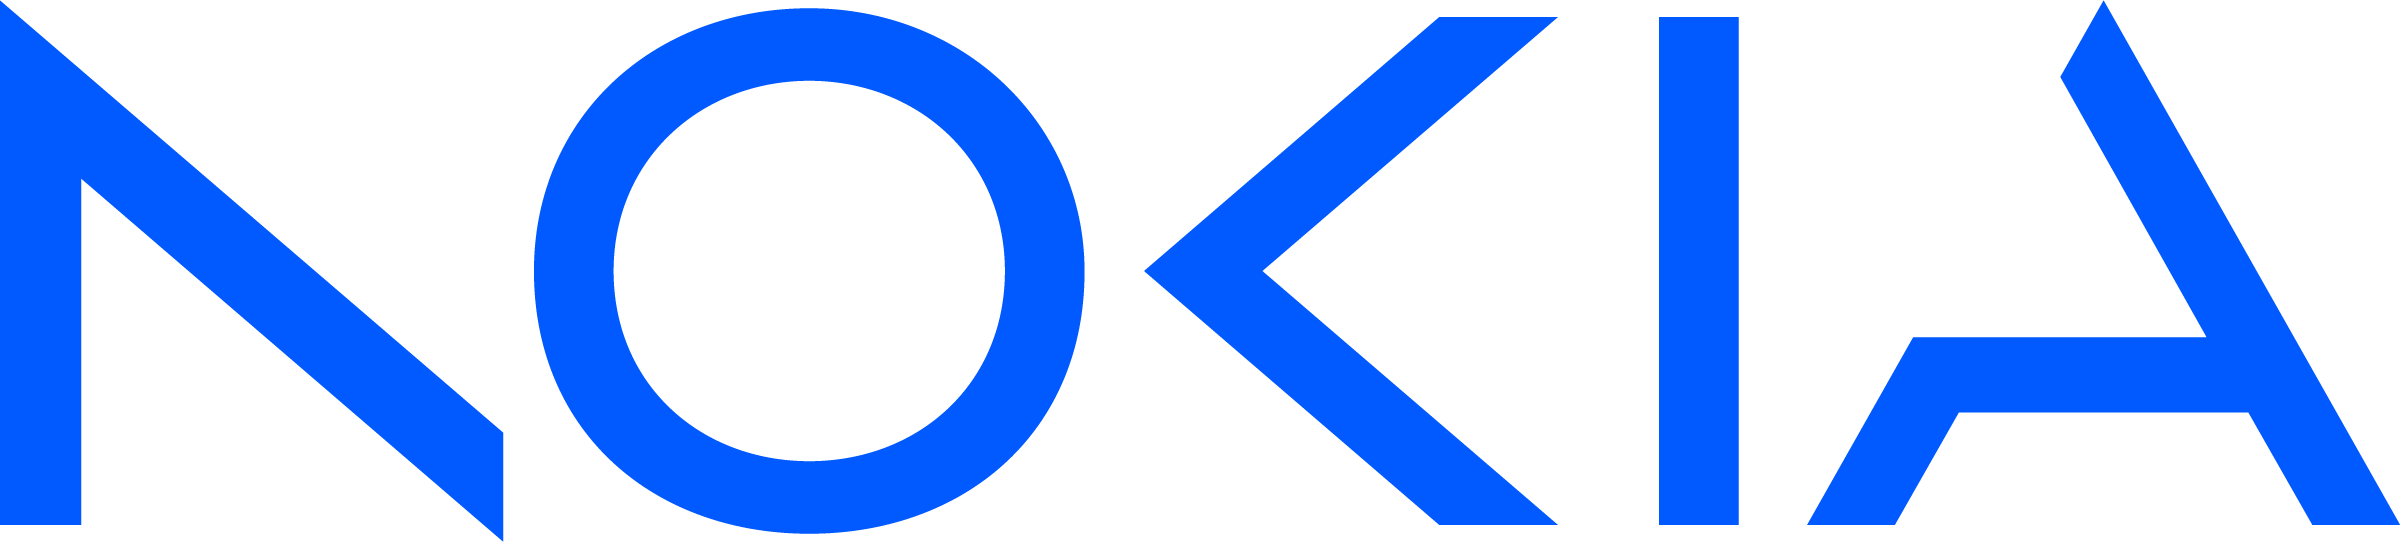 Nokia Logo in Blue